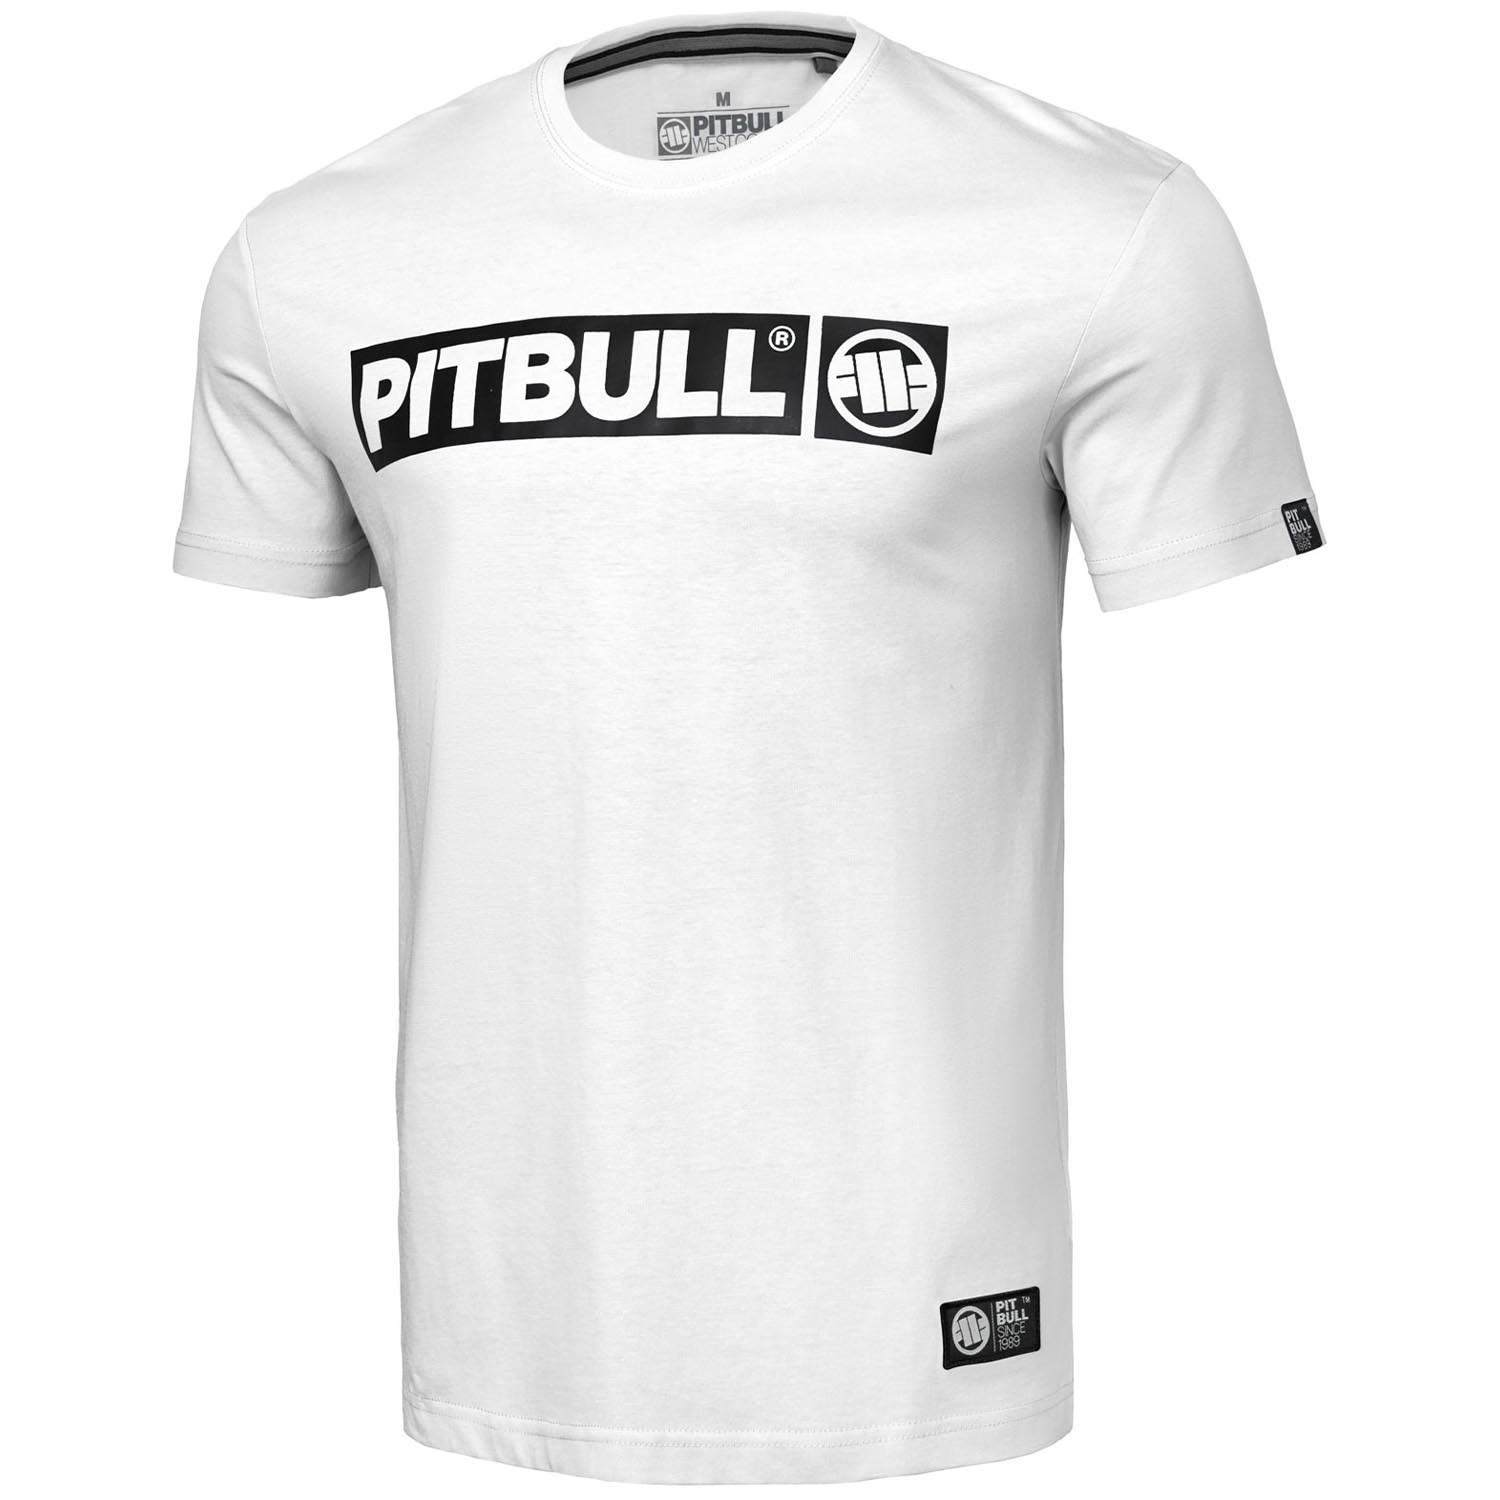 Pit Bull West Coast T-Shirtt, Hilltop S70, white